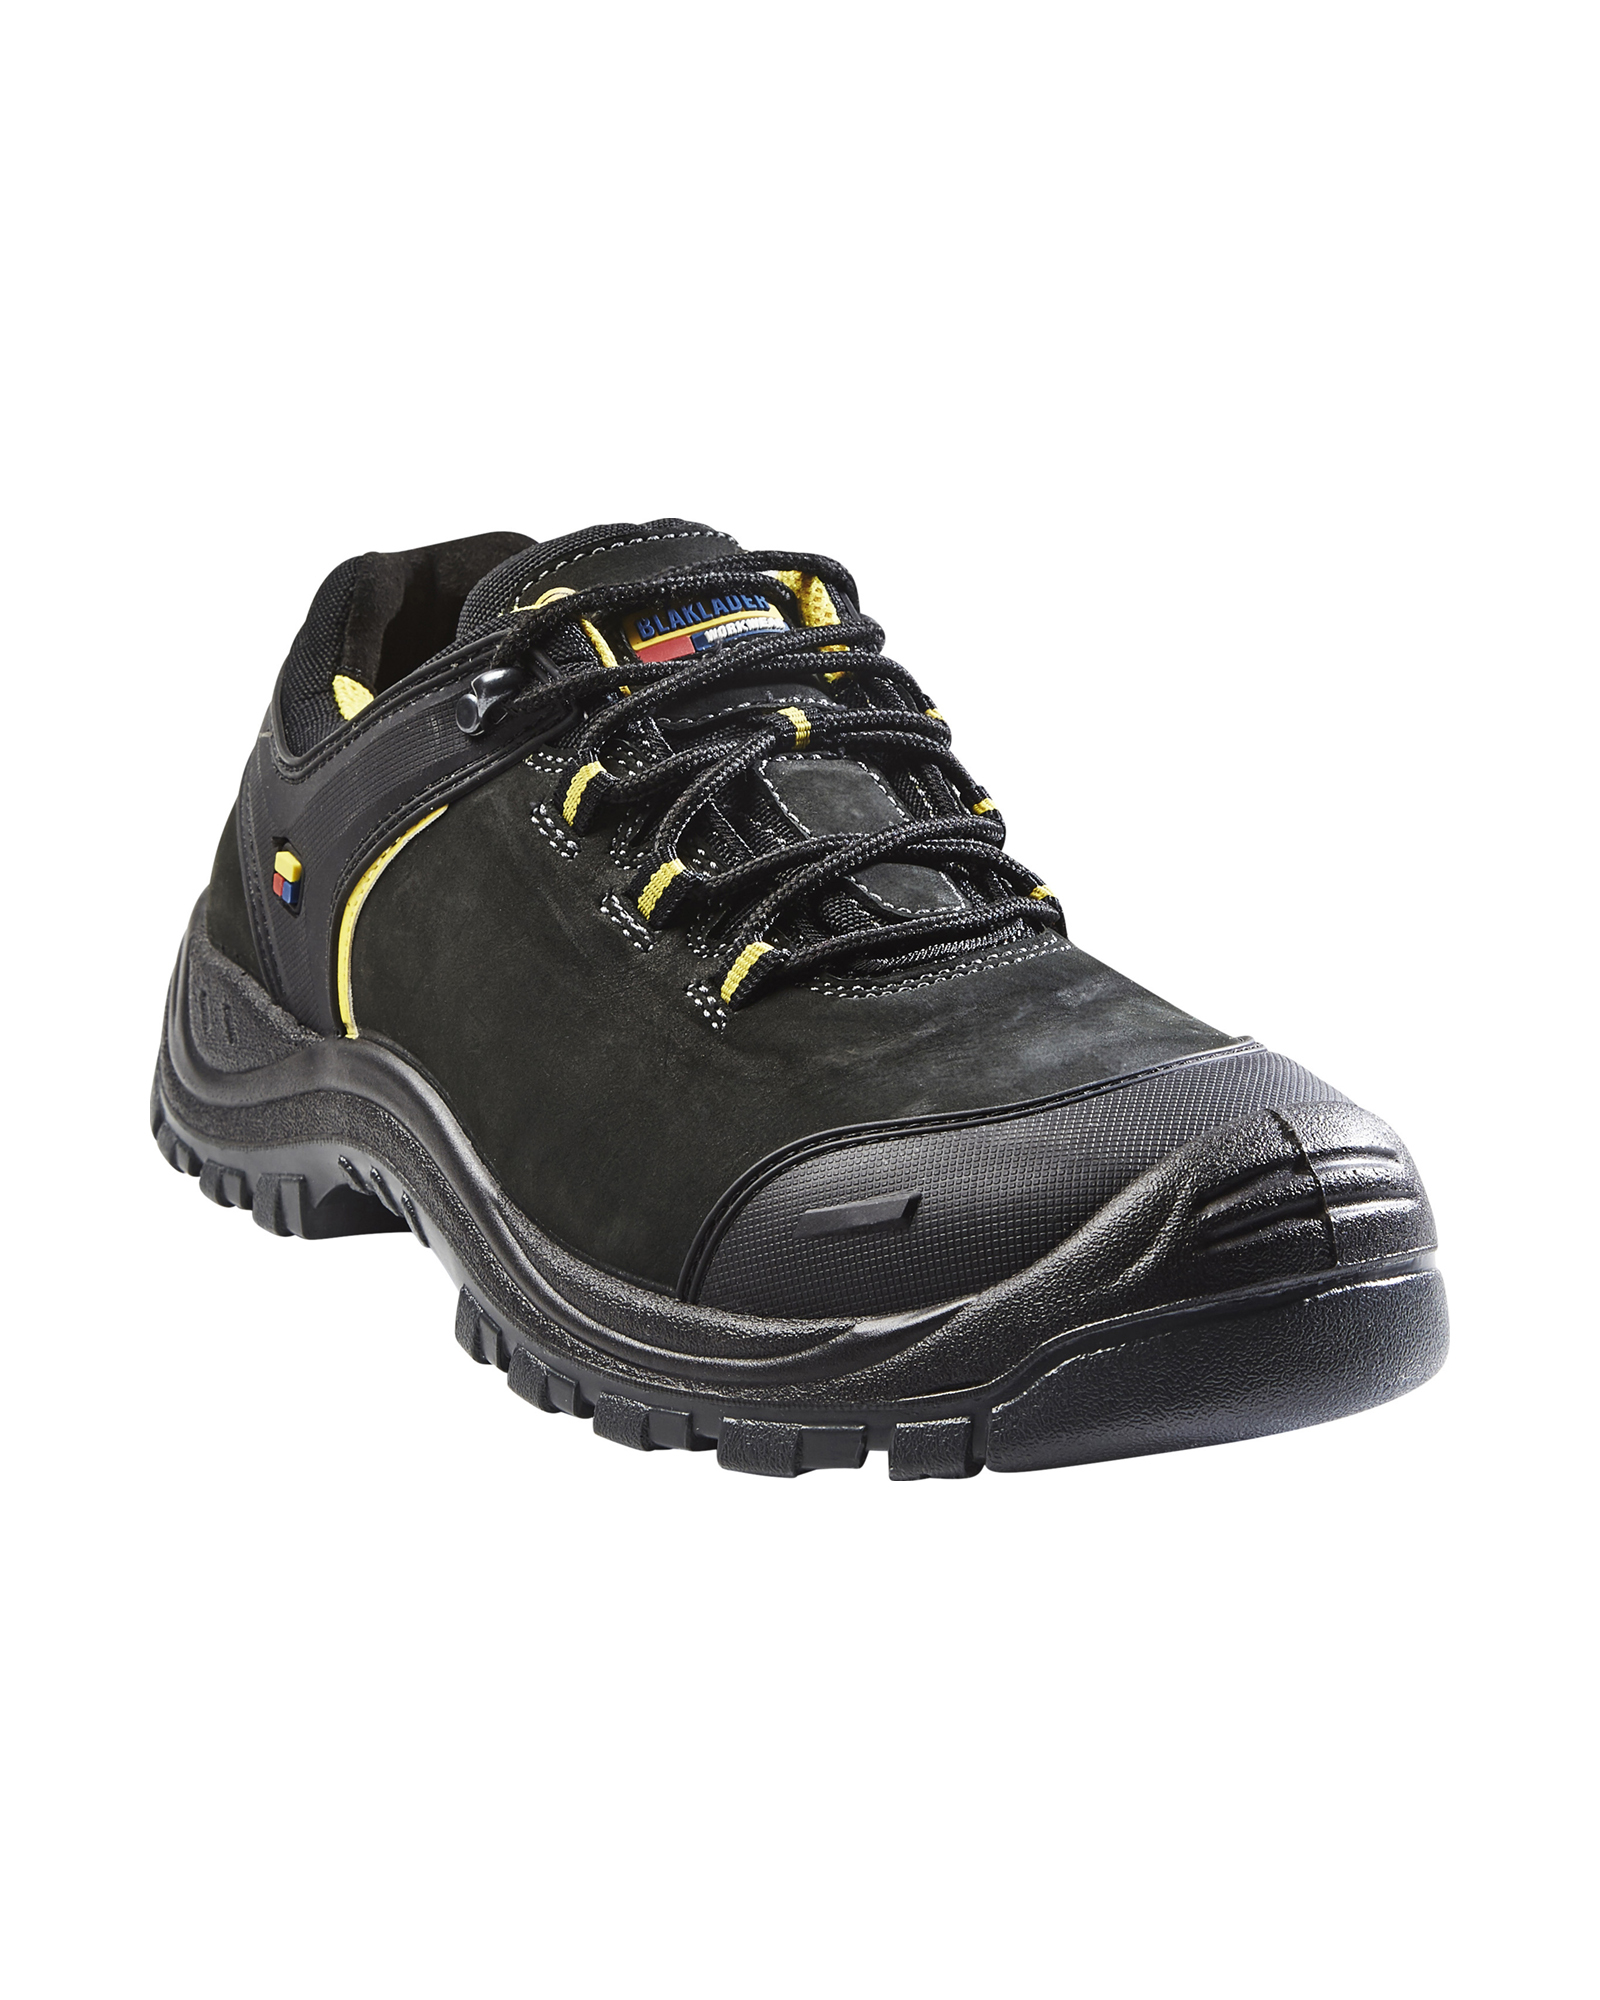 Chaussures de sécurité Blaklader 2317 Noir/Gris anthracite Blaklader - 231710909997W